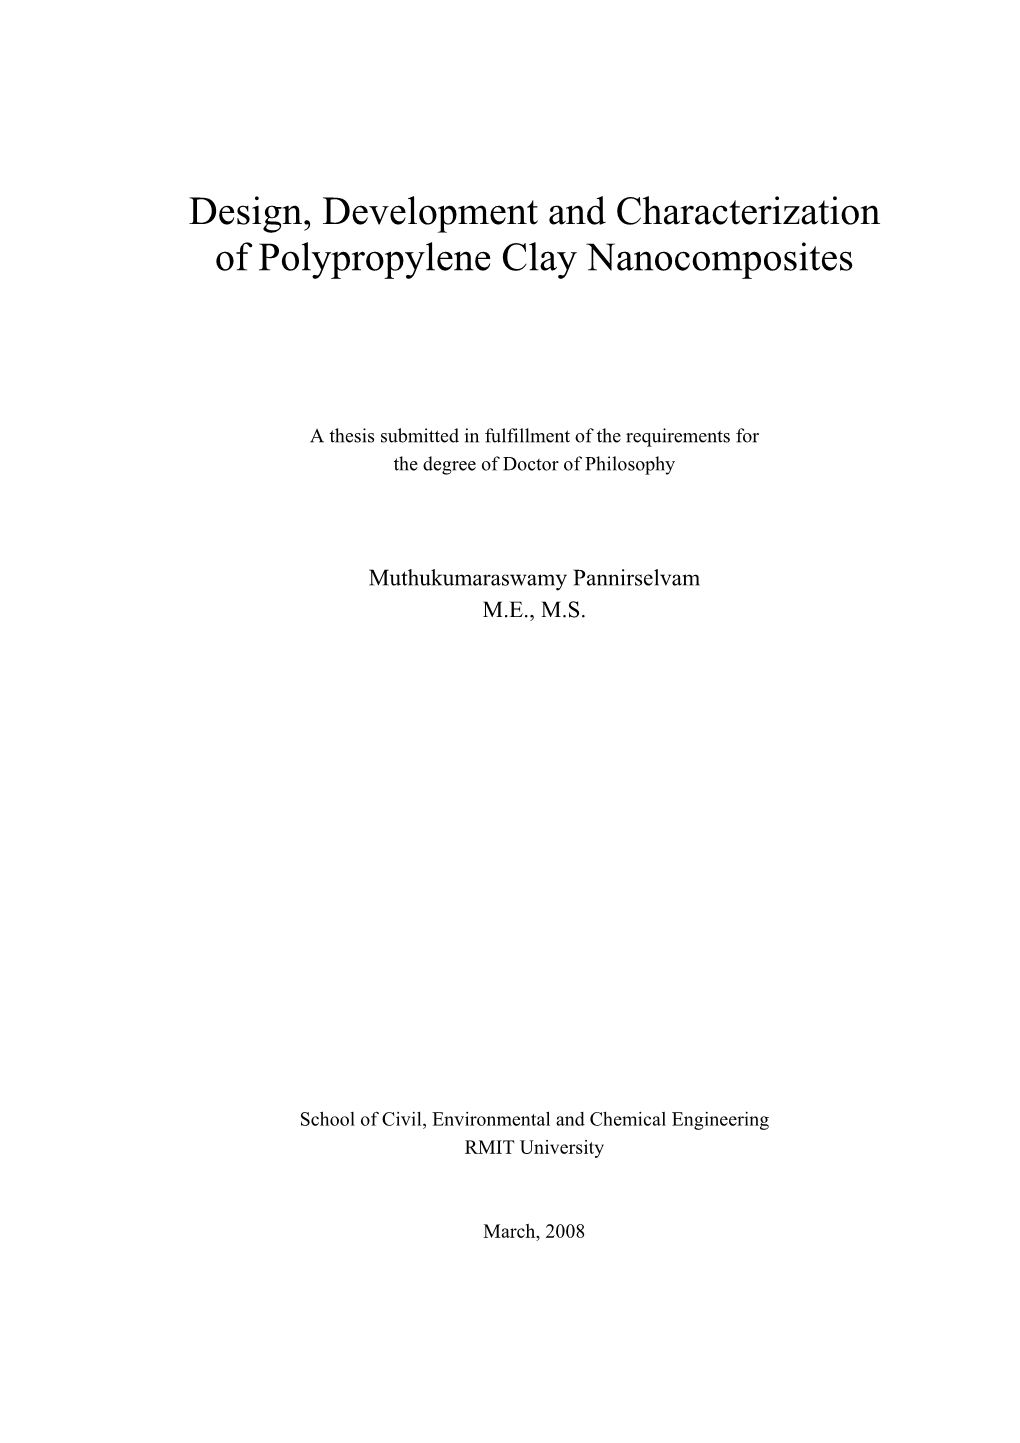 Design, Development and Characterization of Polypropylene Clay Nanocomposites